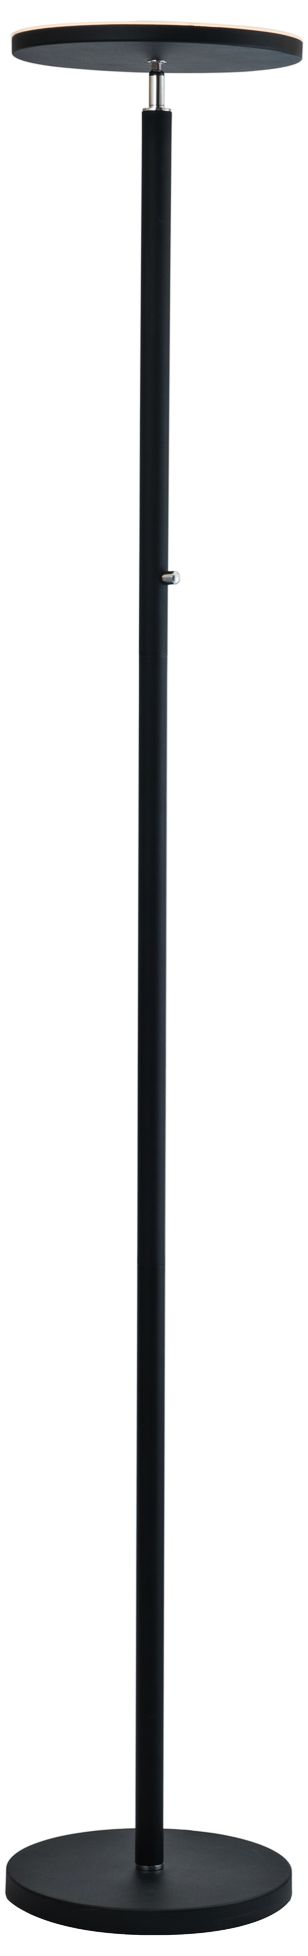 Lite Source Monet Black LED Torchiere Floor Lamp - #69G48